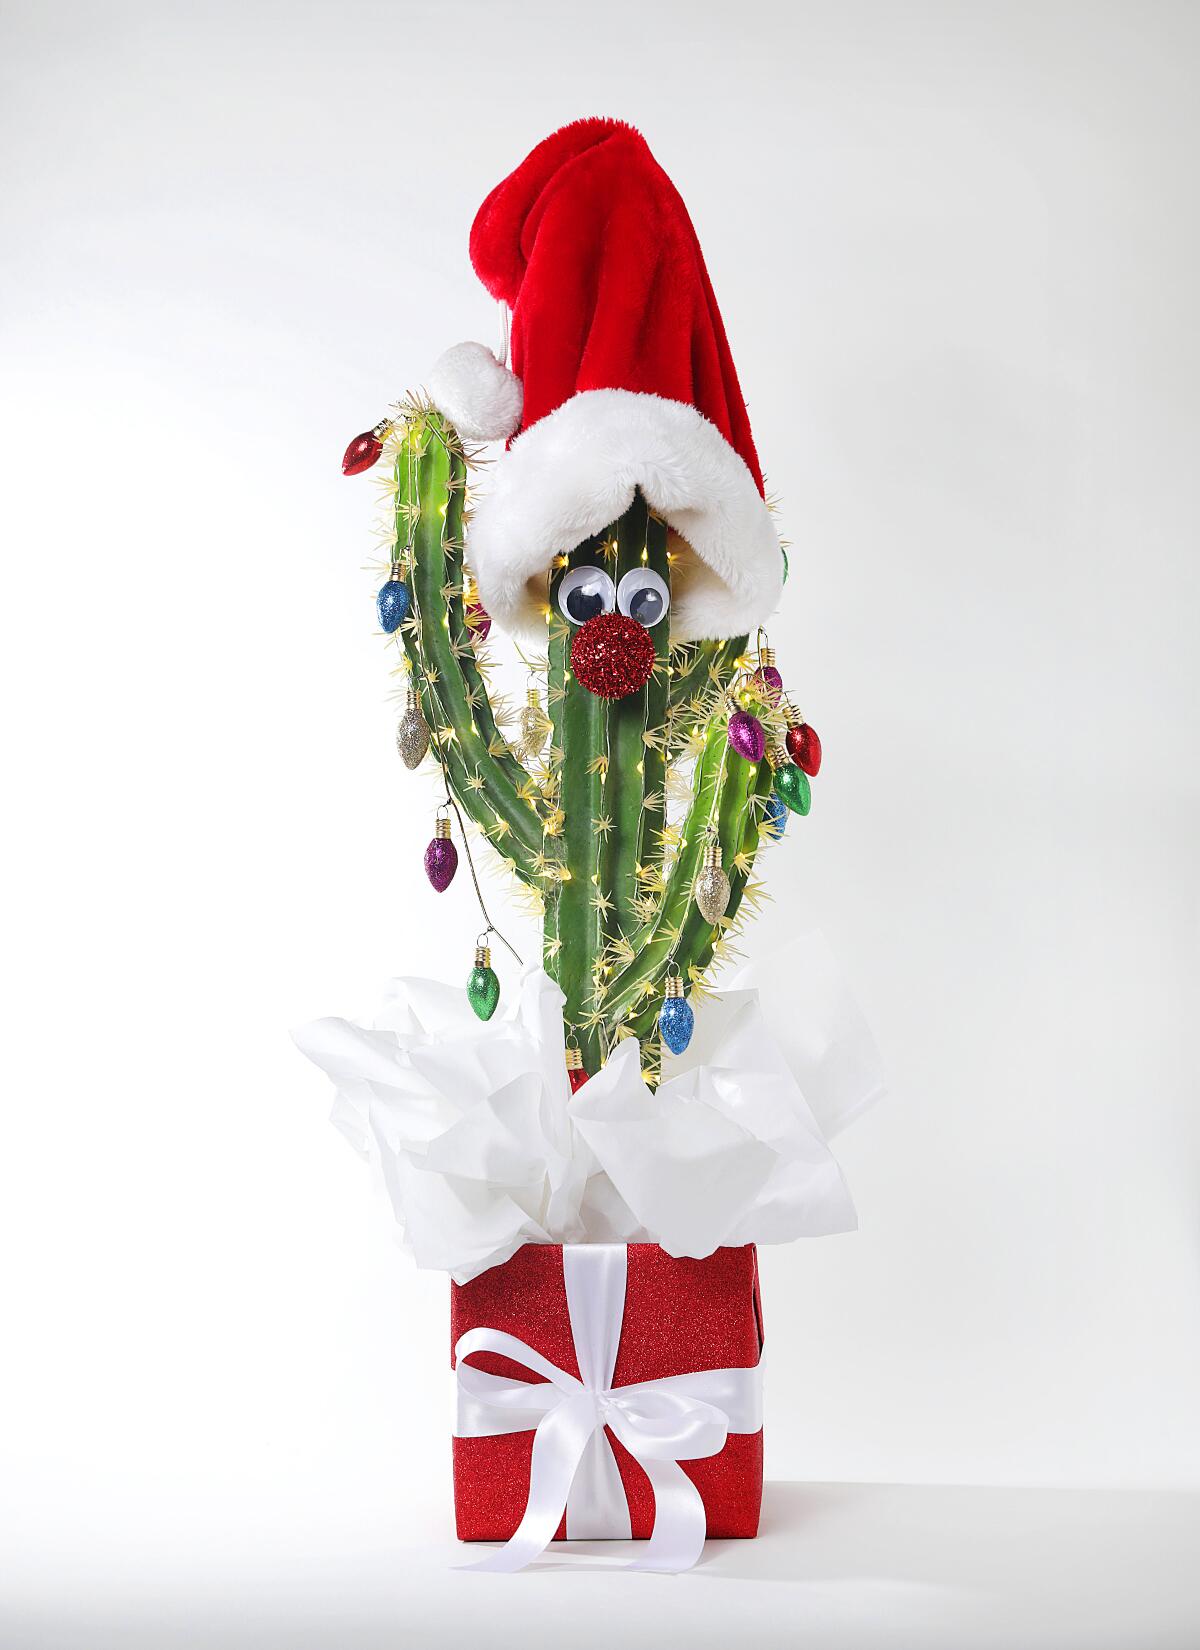 The googly-eyes holiday cactus